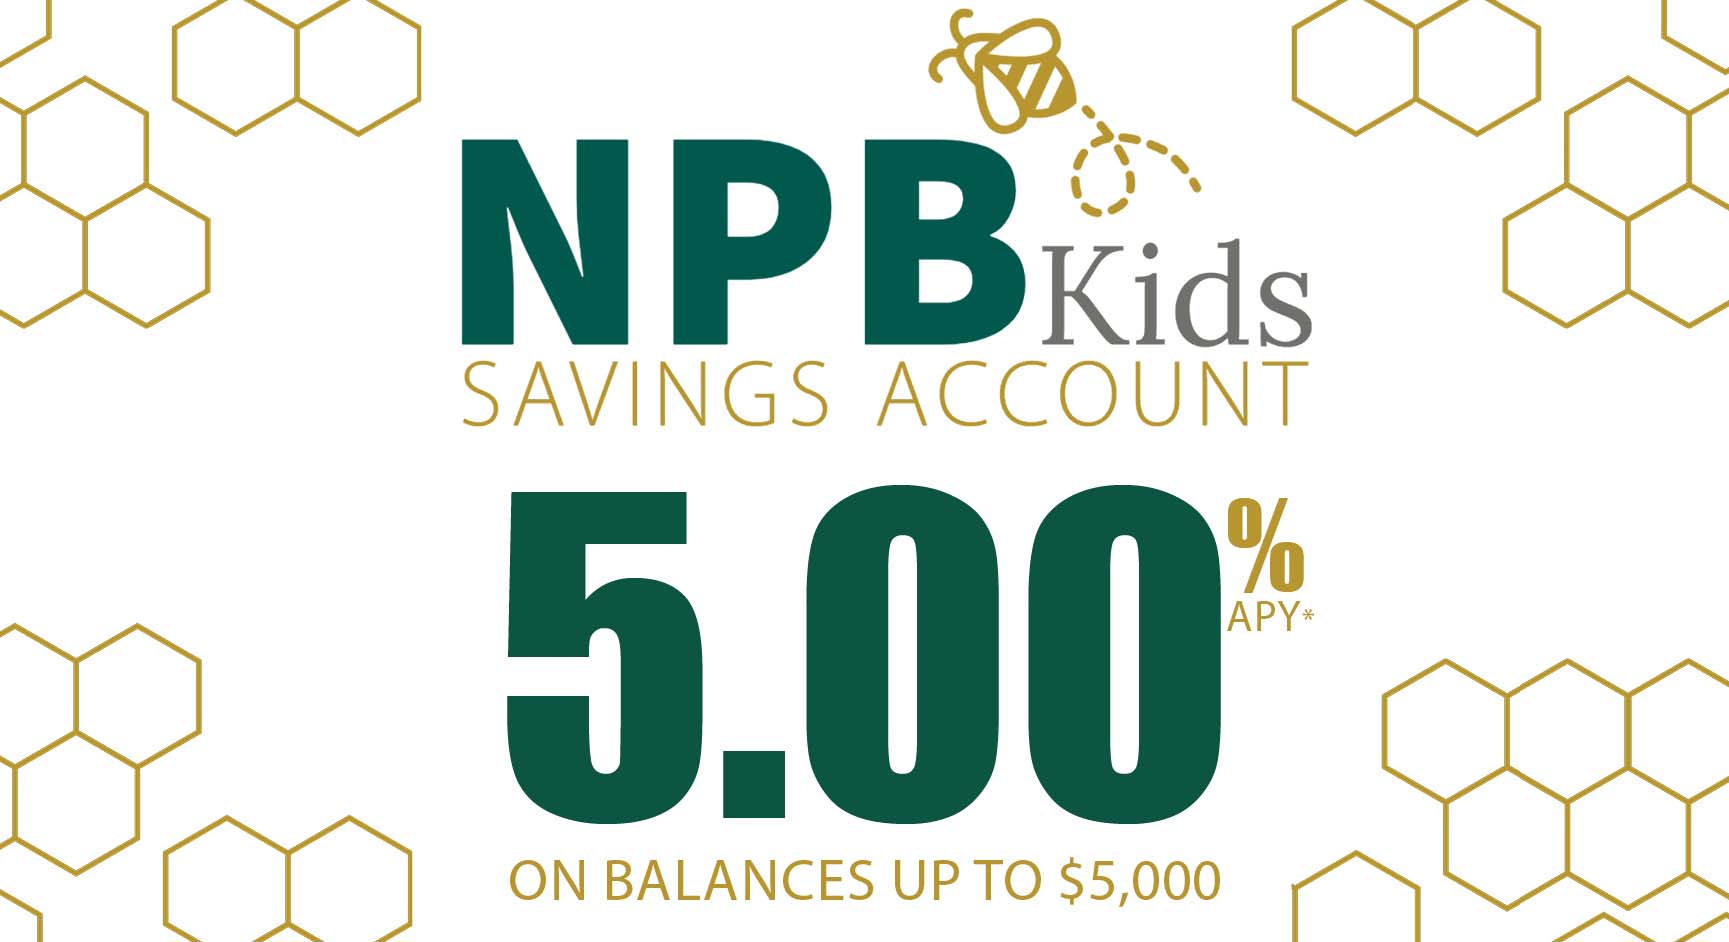 NPB kids savings